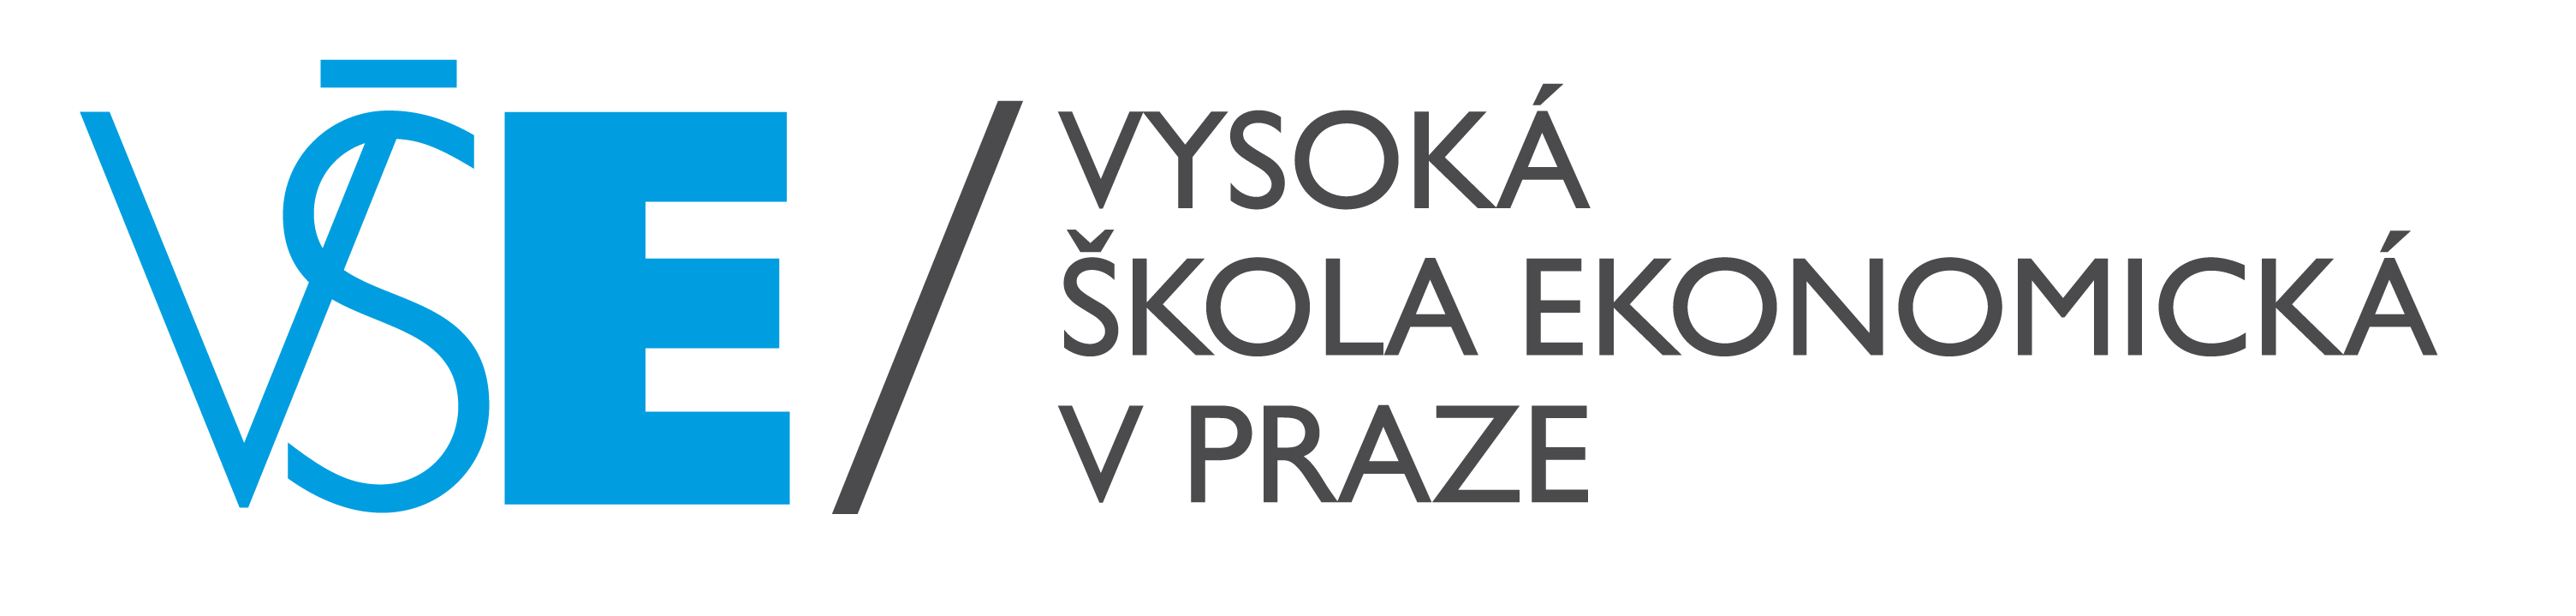 VSE logo CZ horizontal blueblack